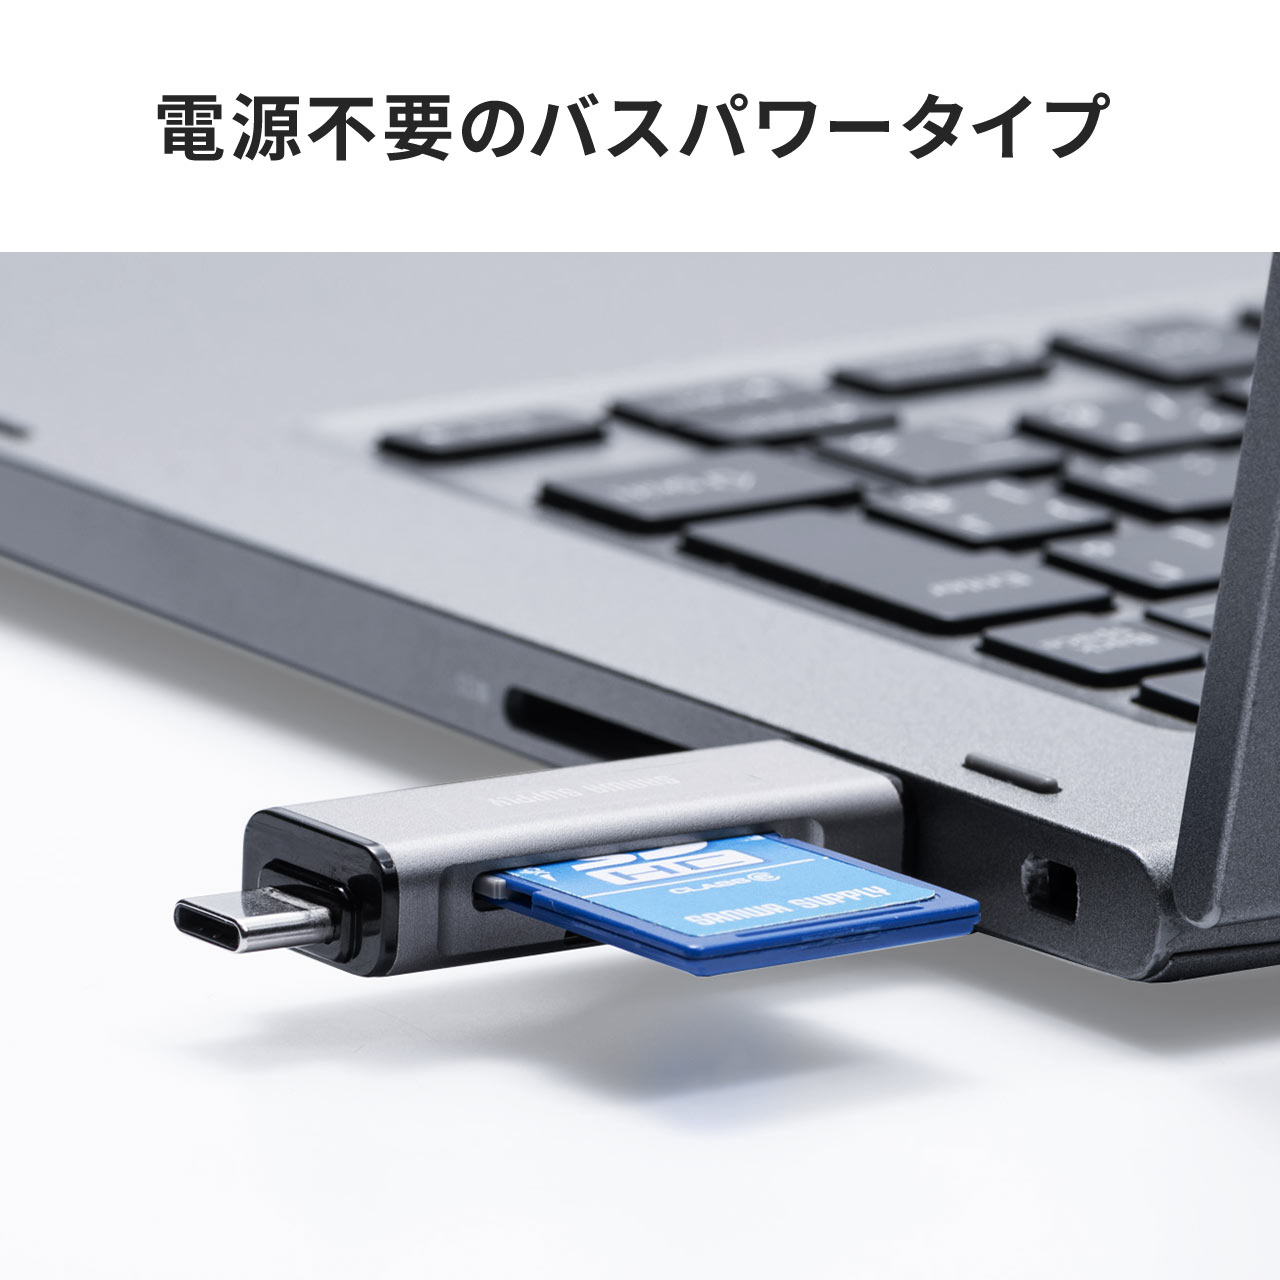 fBAP[Xt SD/microSDJ[h[_[ USB 3.1 Gen1 USB A USB Type-Cڑ 400-ADR323GY